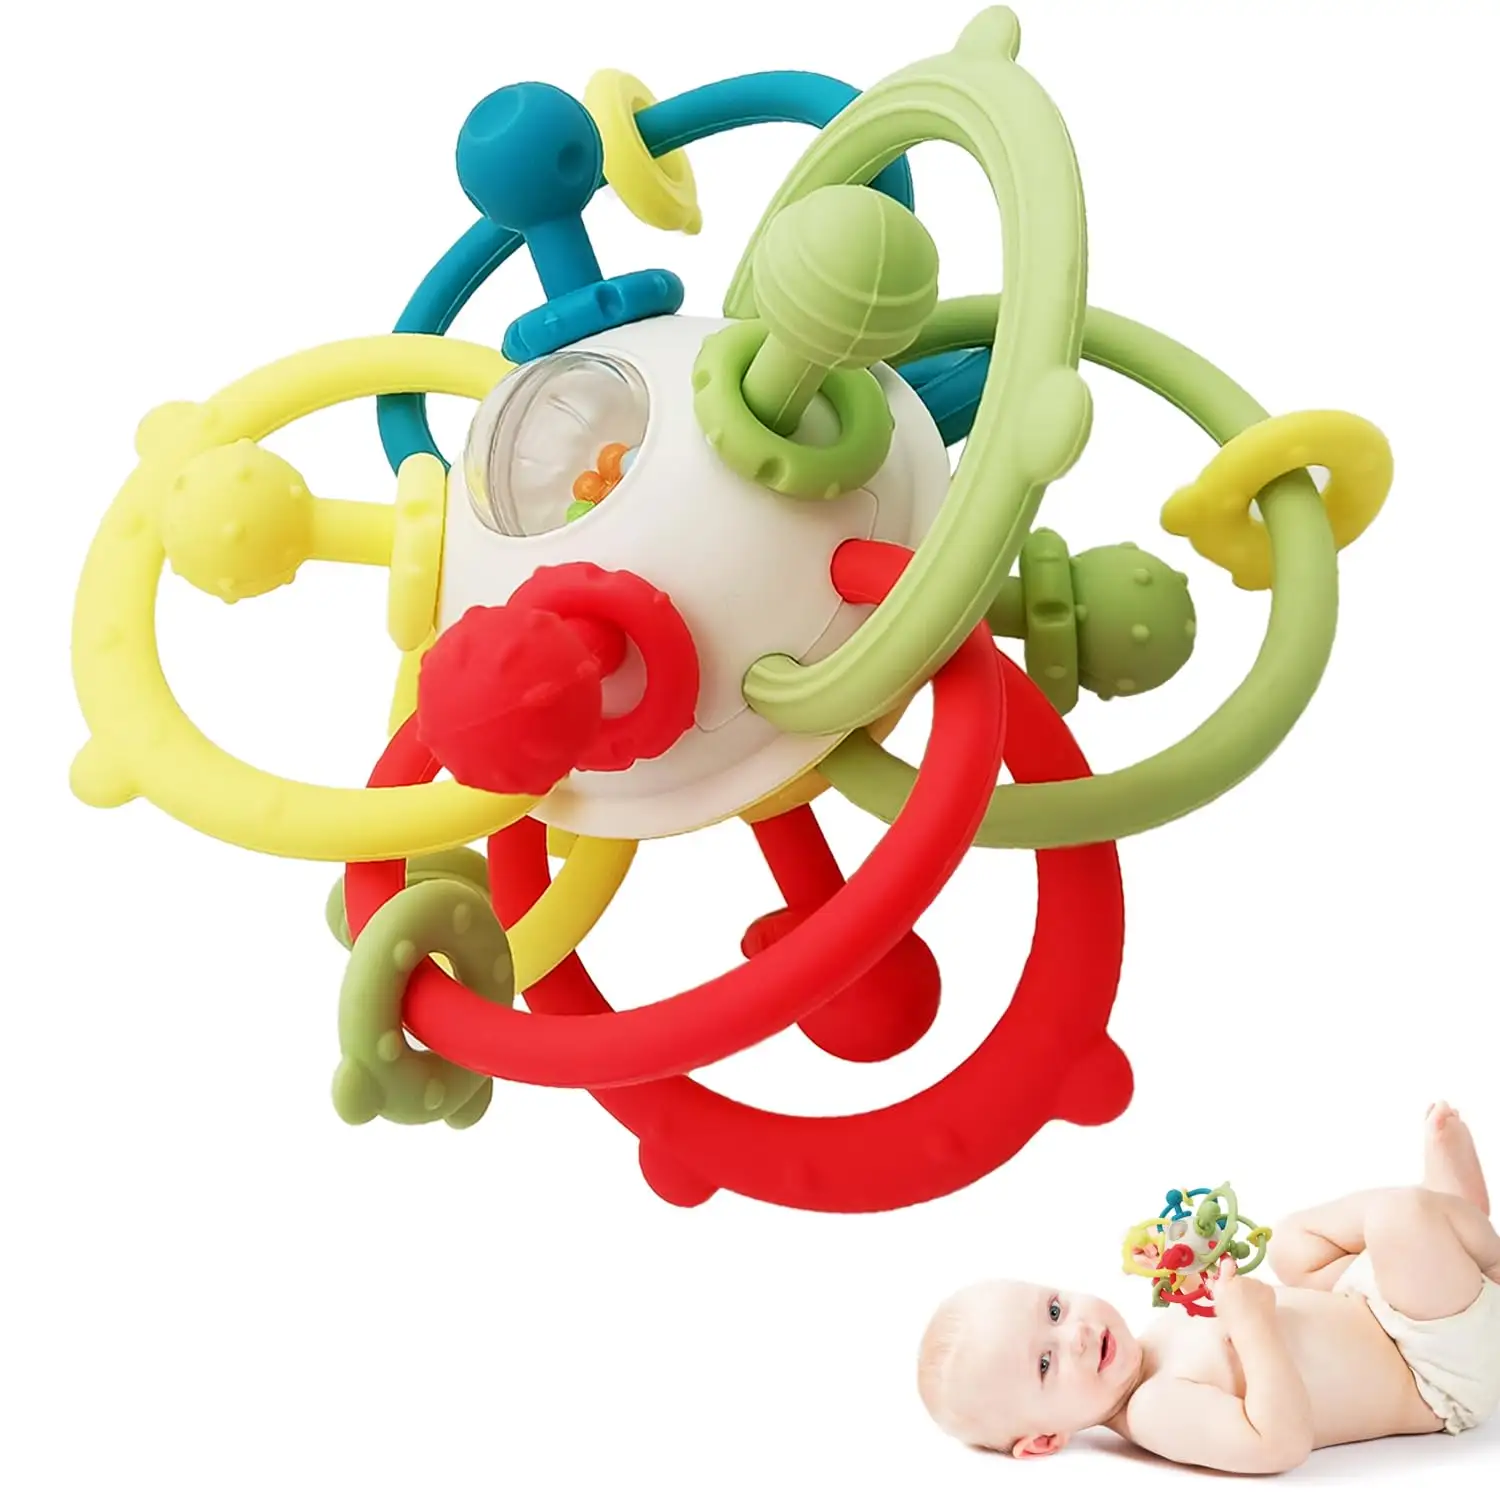 नवजात मोंटेसरी लर्निंग खिलौनों के लिए सॉफ्ट सिलिकॉन बेबी टीथिंग रैटल खिलौना, 0-12 महीने की लड़की लड़के के लिए पहला जन्मदिन का उपहार